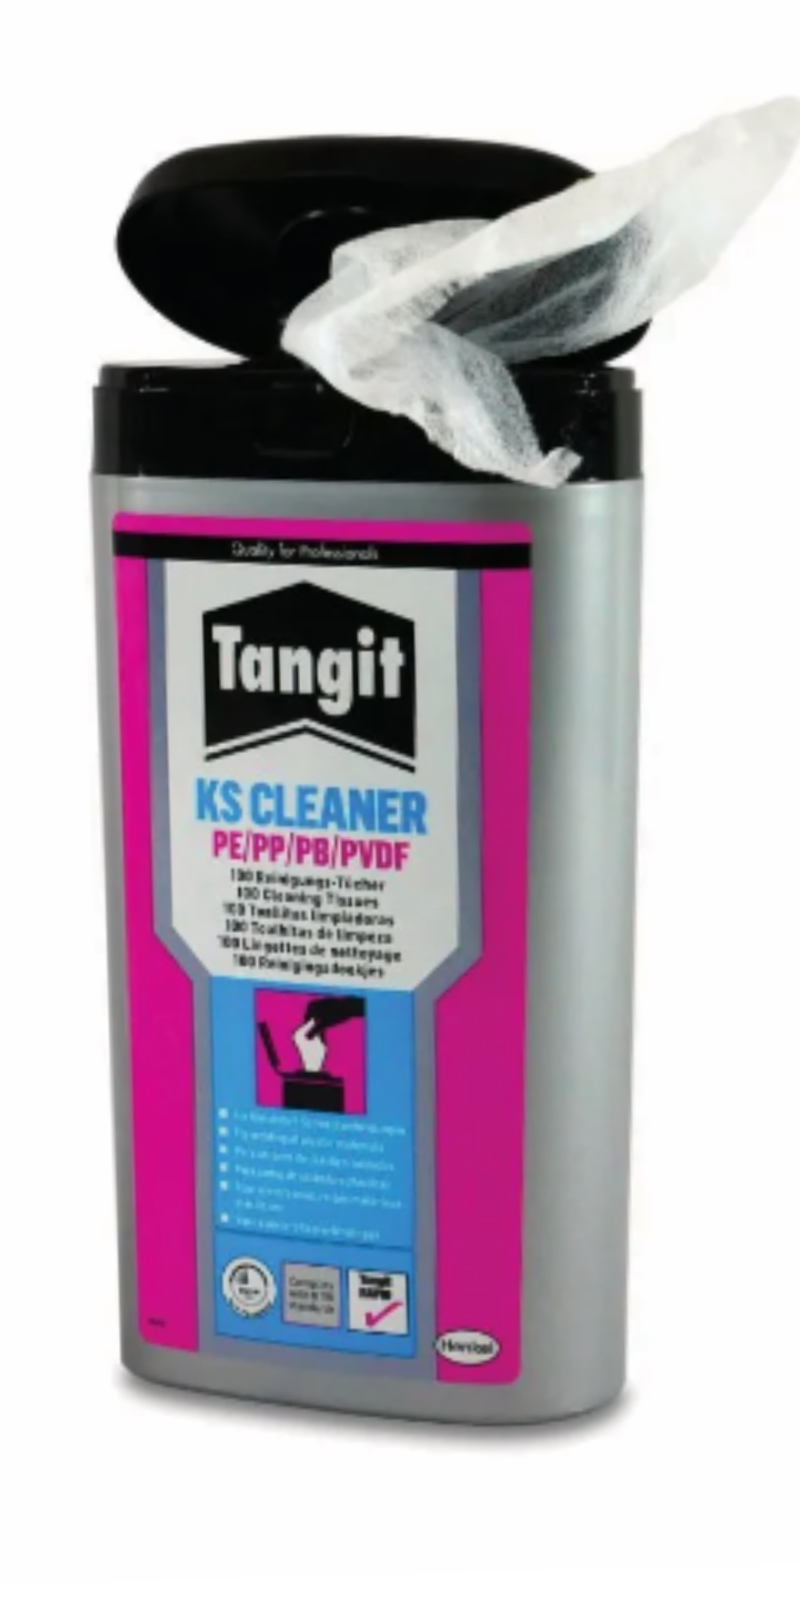 Tangit cleaner reinigingsdoekjes voor PE/PP/PVC | 100 stuks